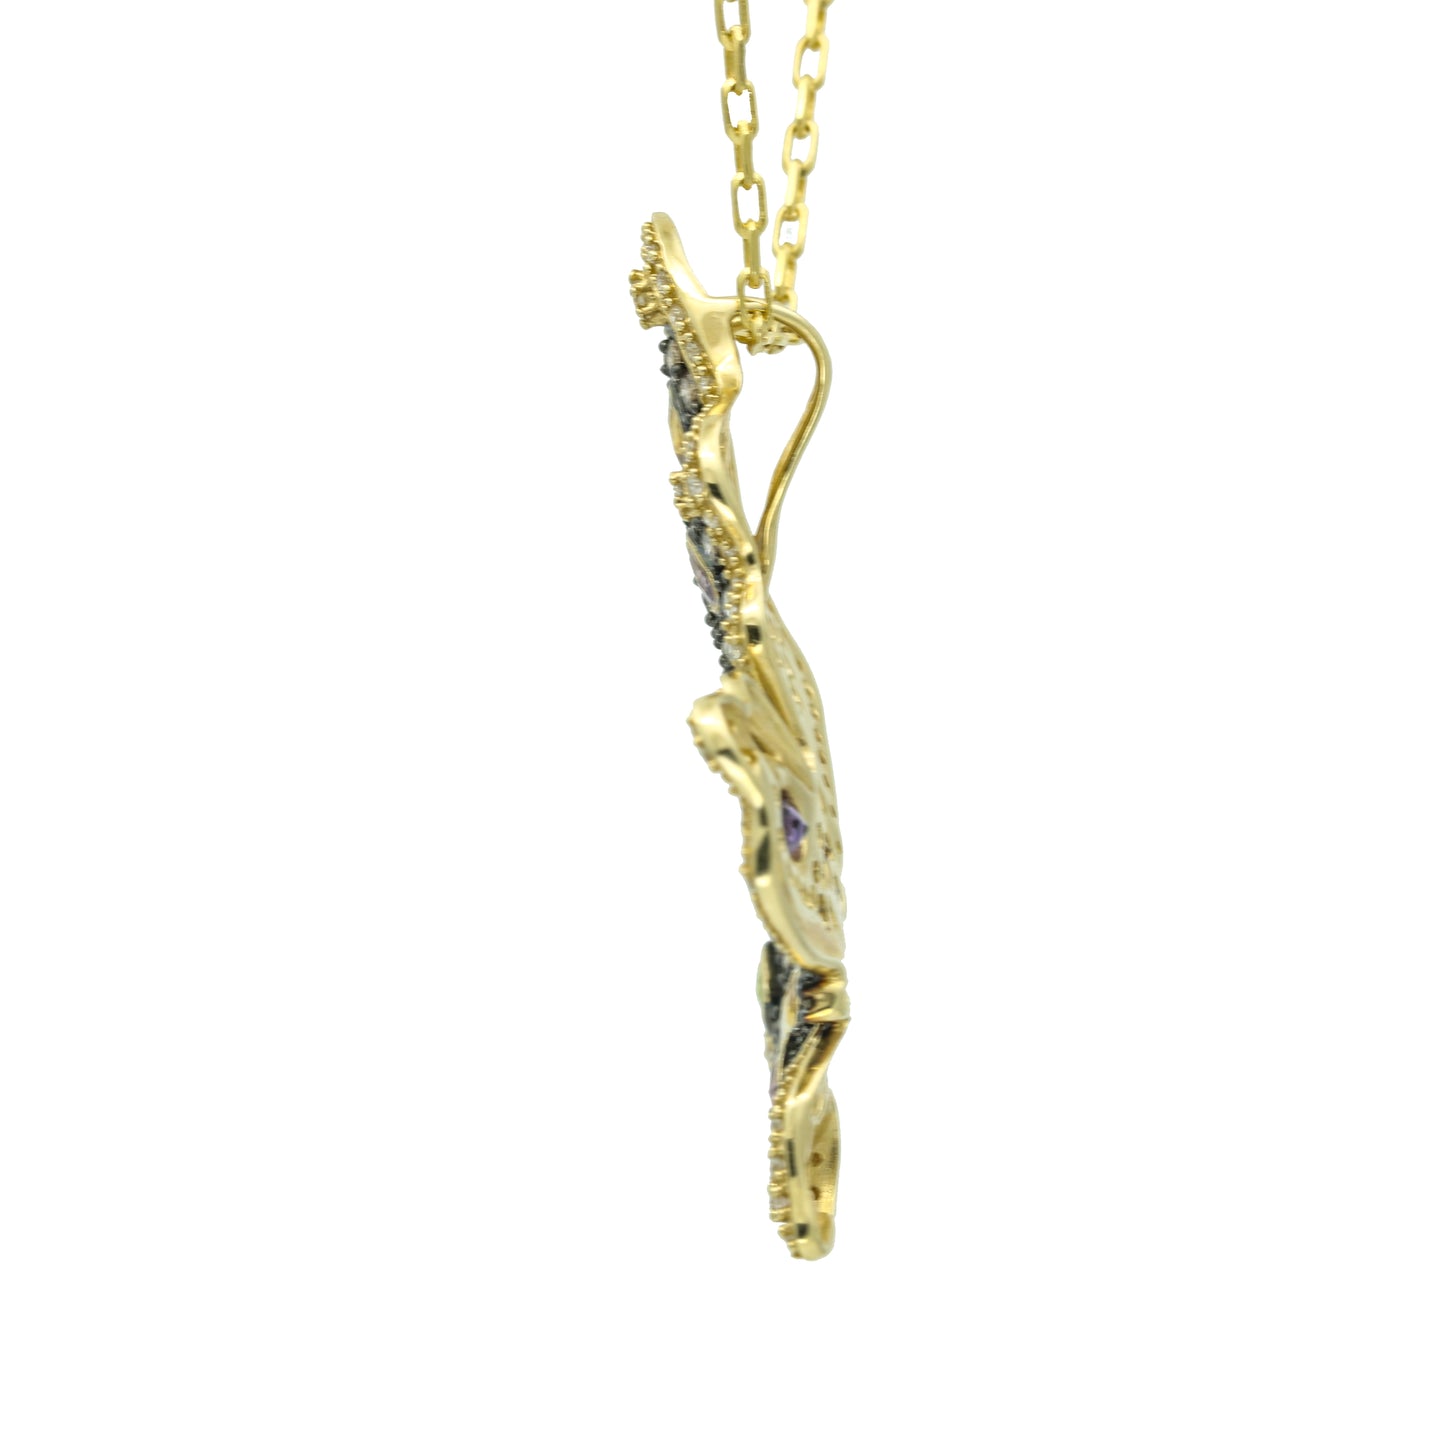 LeVian Statement Butterfly Pendant Necklace Gemstones Diamonds 14k Gold